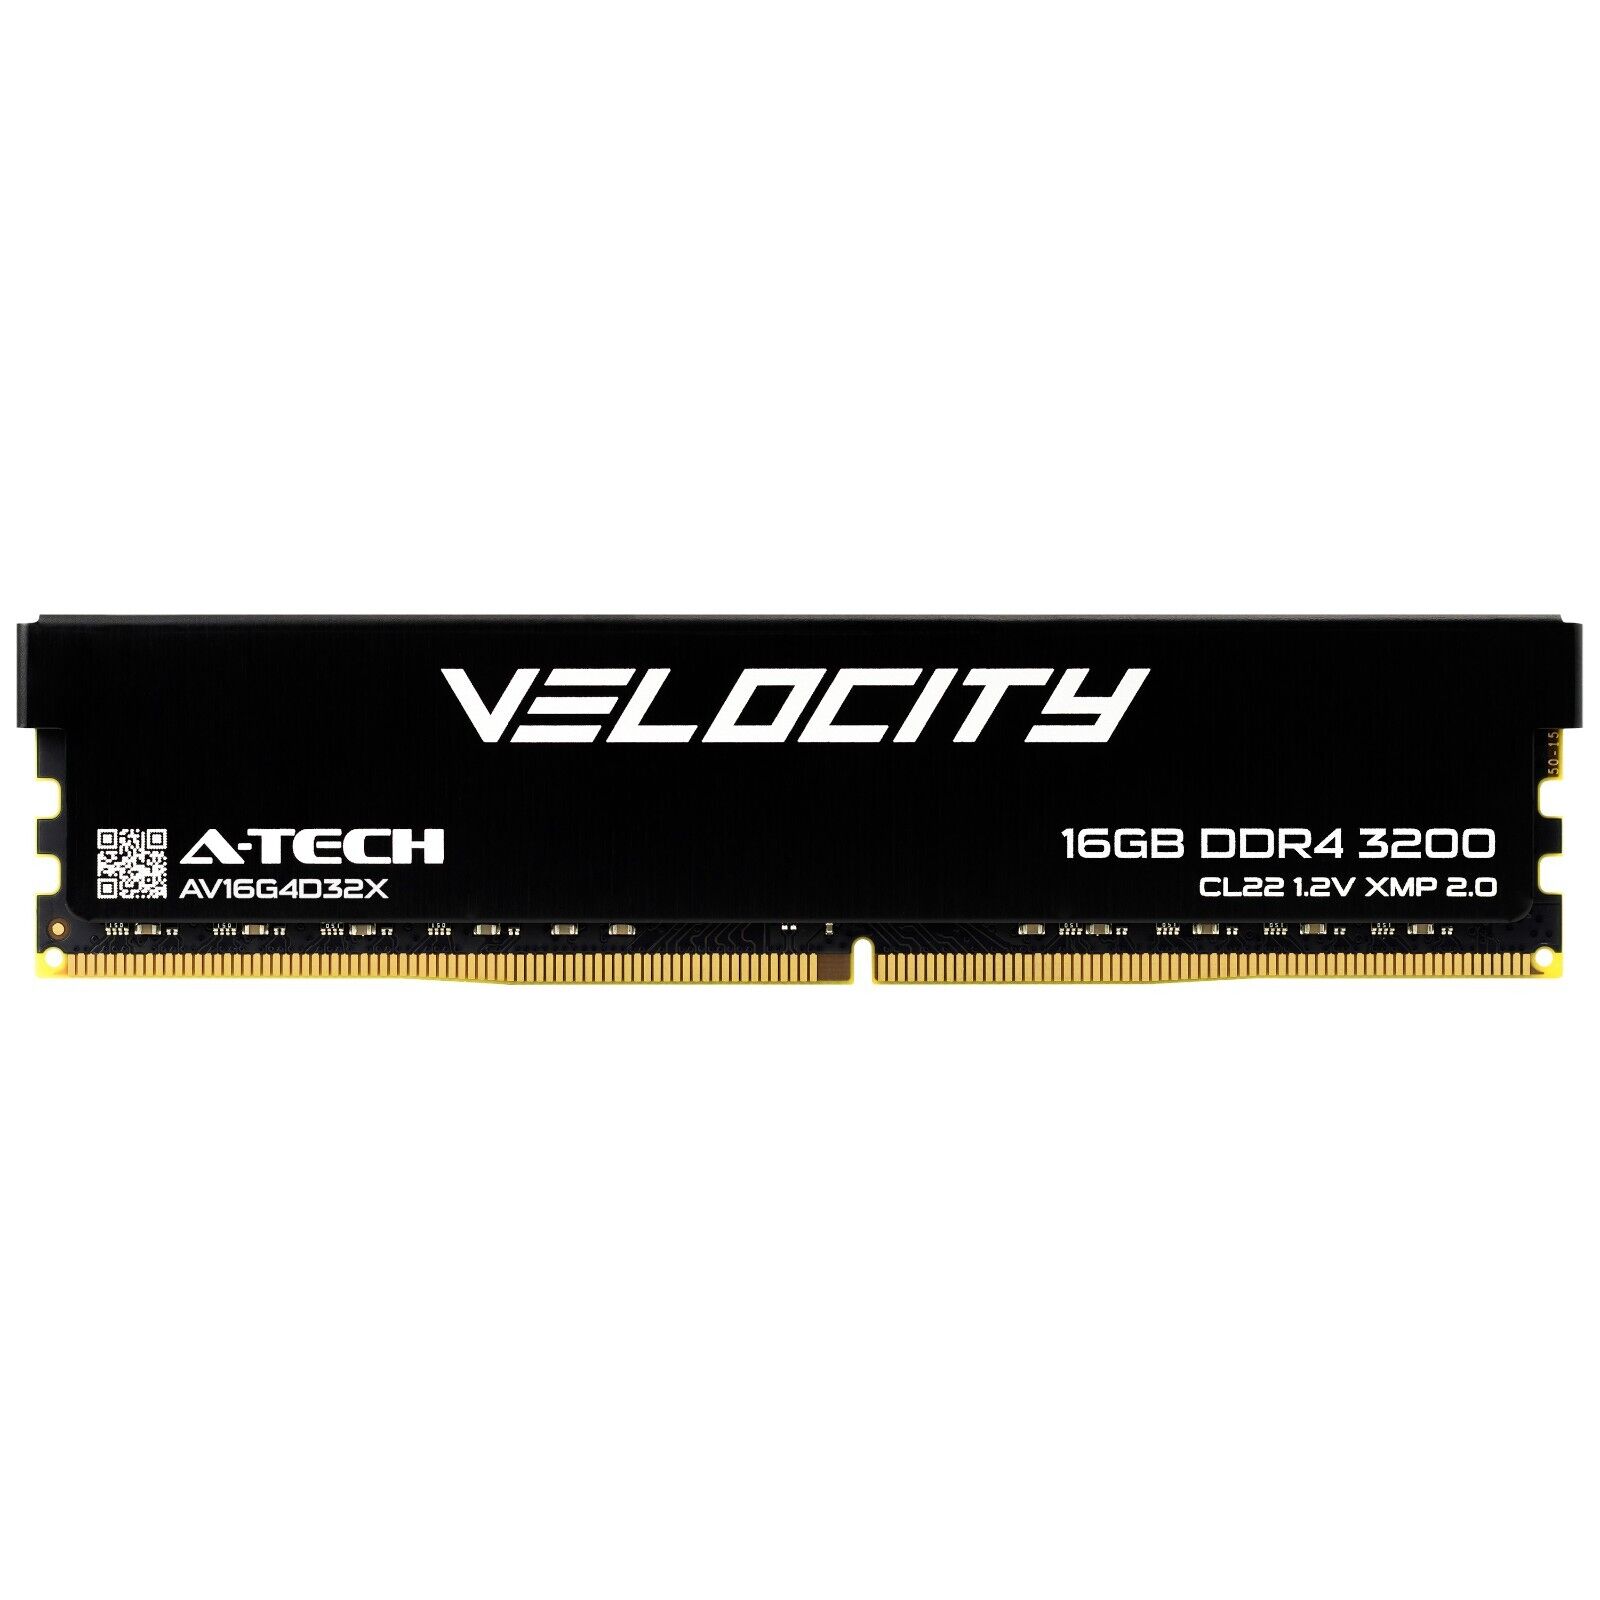 A-Tech Velocity 16GB DDR4 3200 (PC4-25600) CL22 XMP Desktop PC Gaming Memory RAM